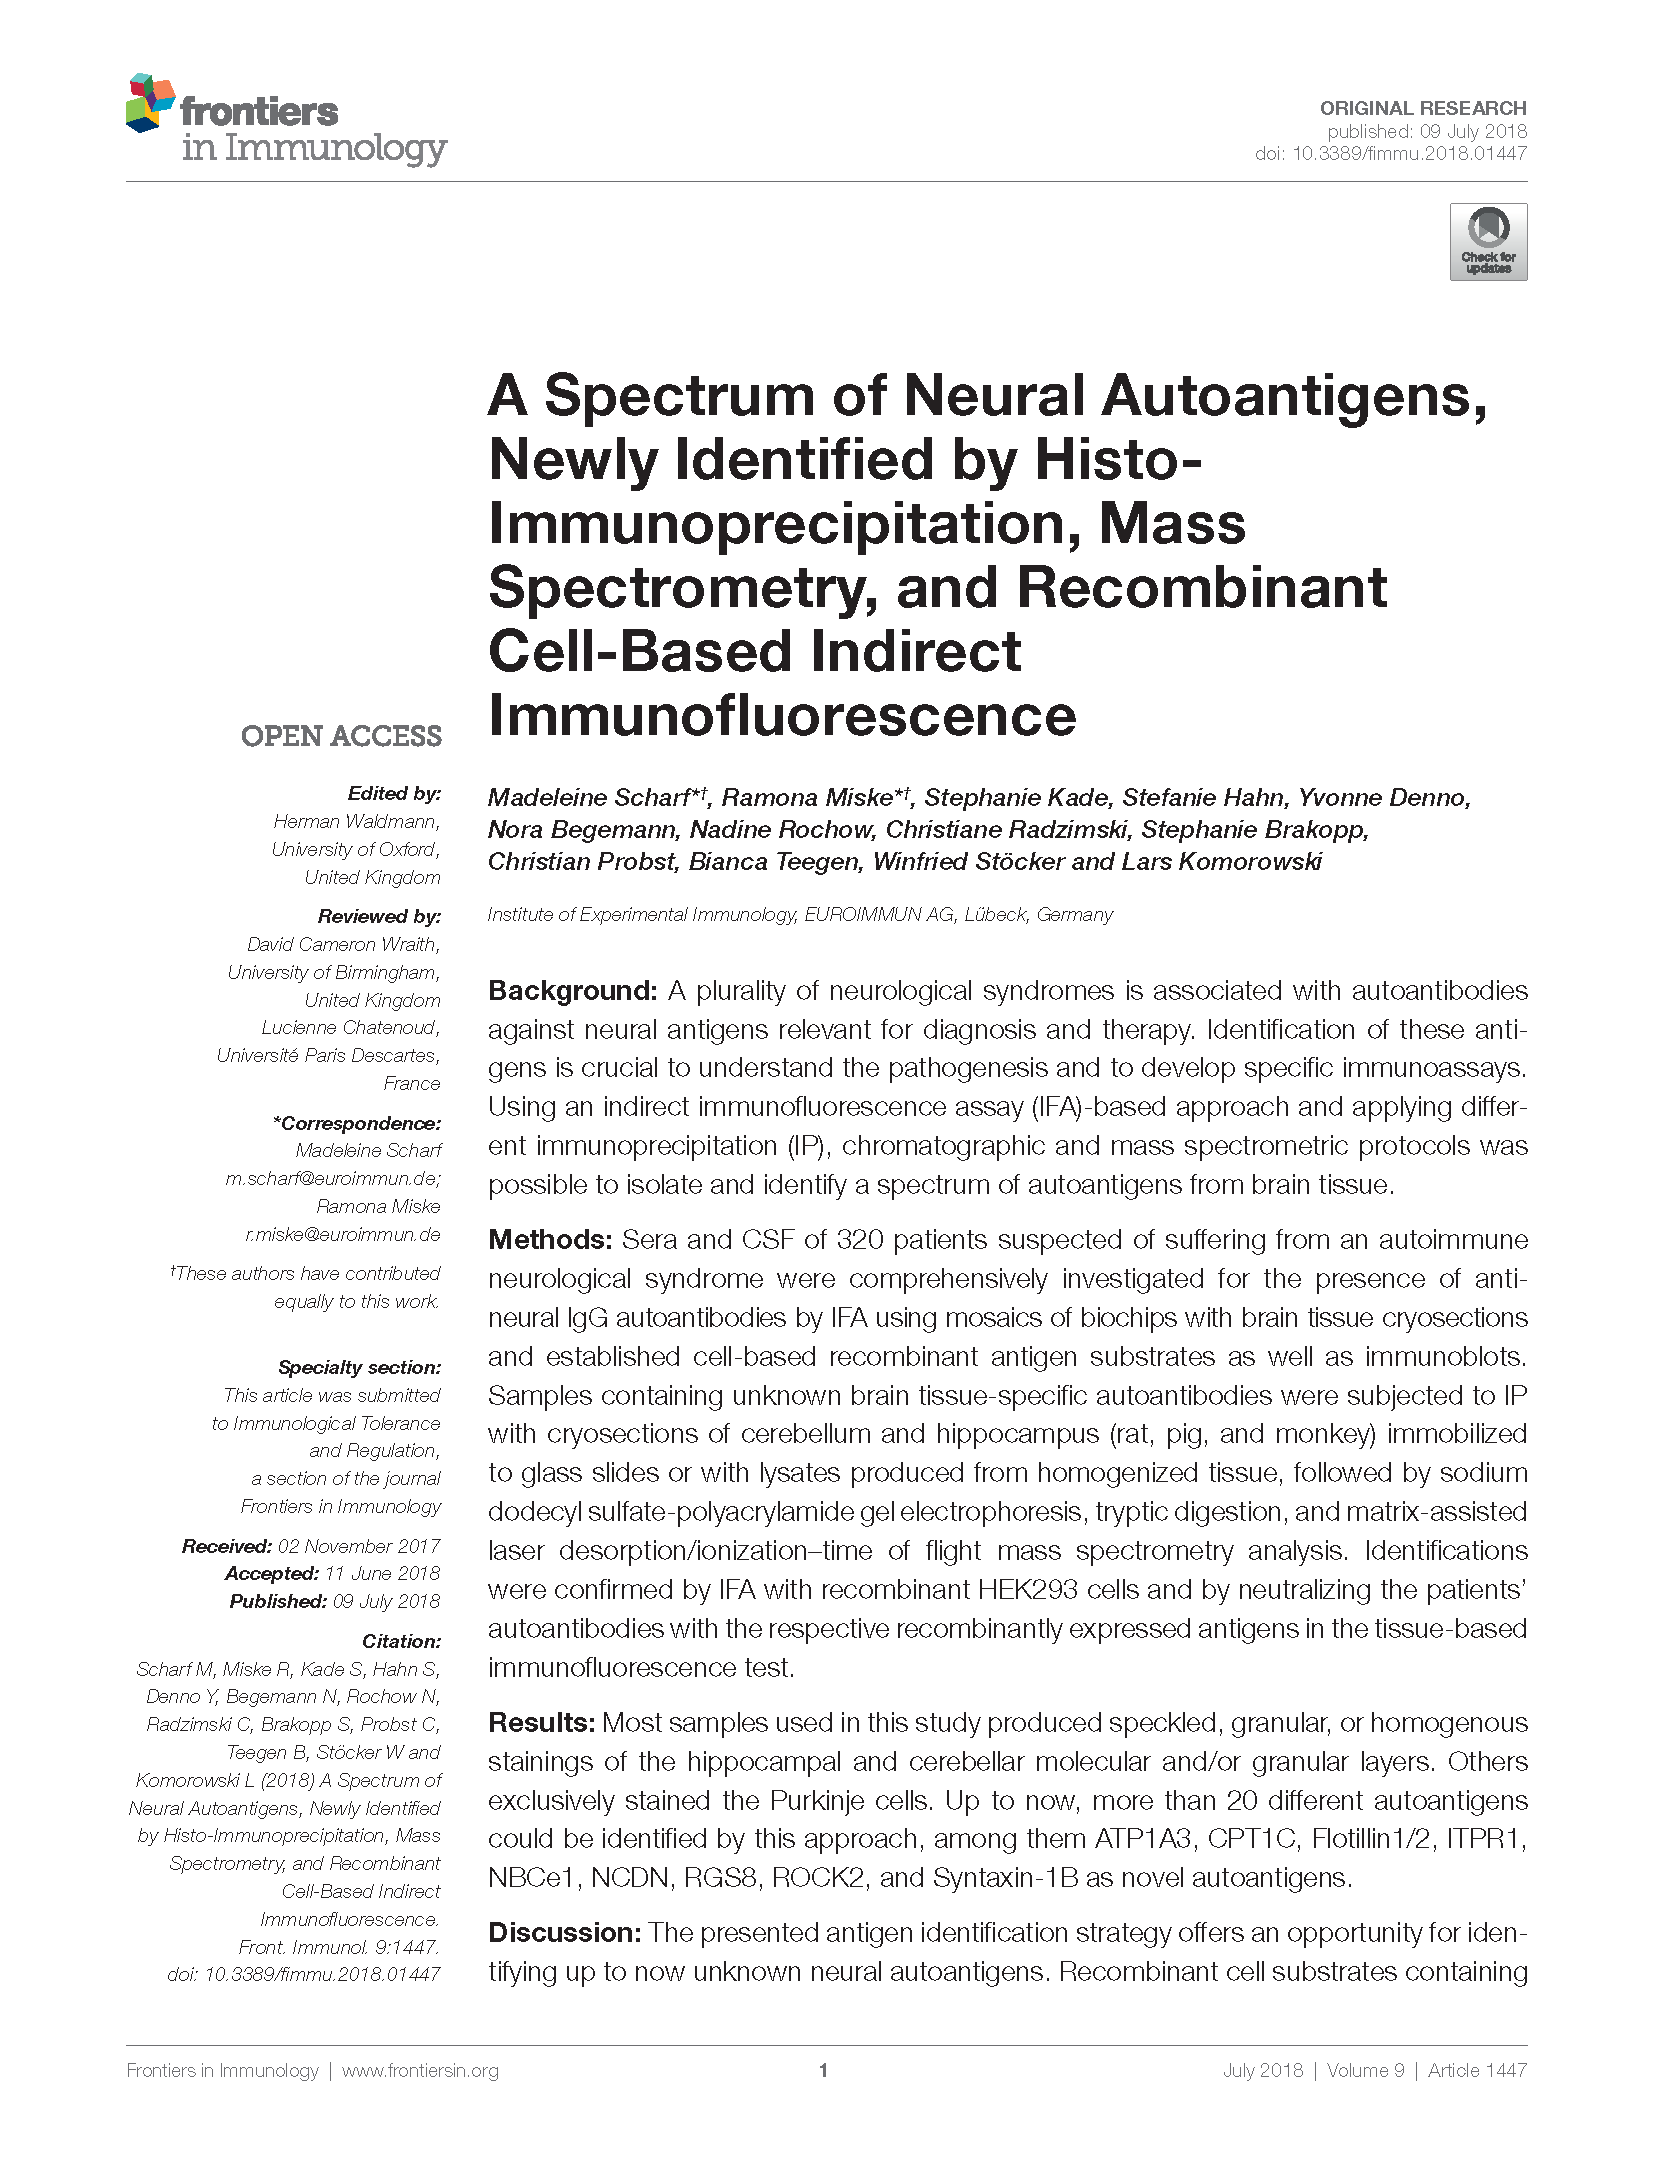 A spectrum of neural autoantigens, newly identified by histo-immunoprecipitation, mass spectrometry and recombinant cell-based indirect immunofluorescence